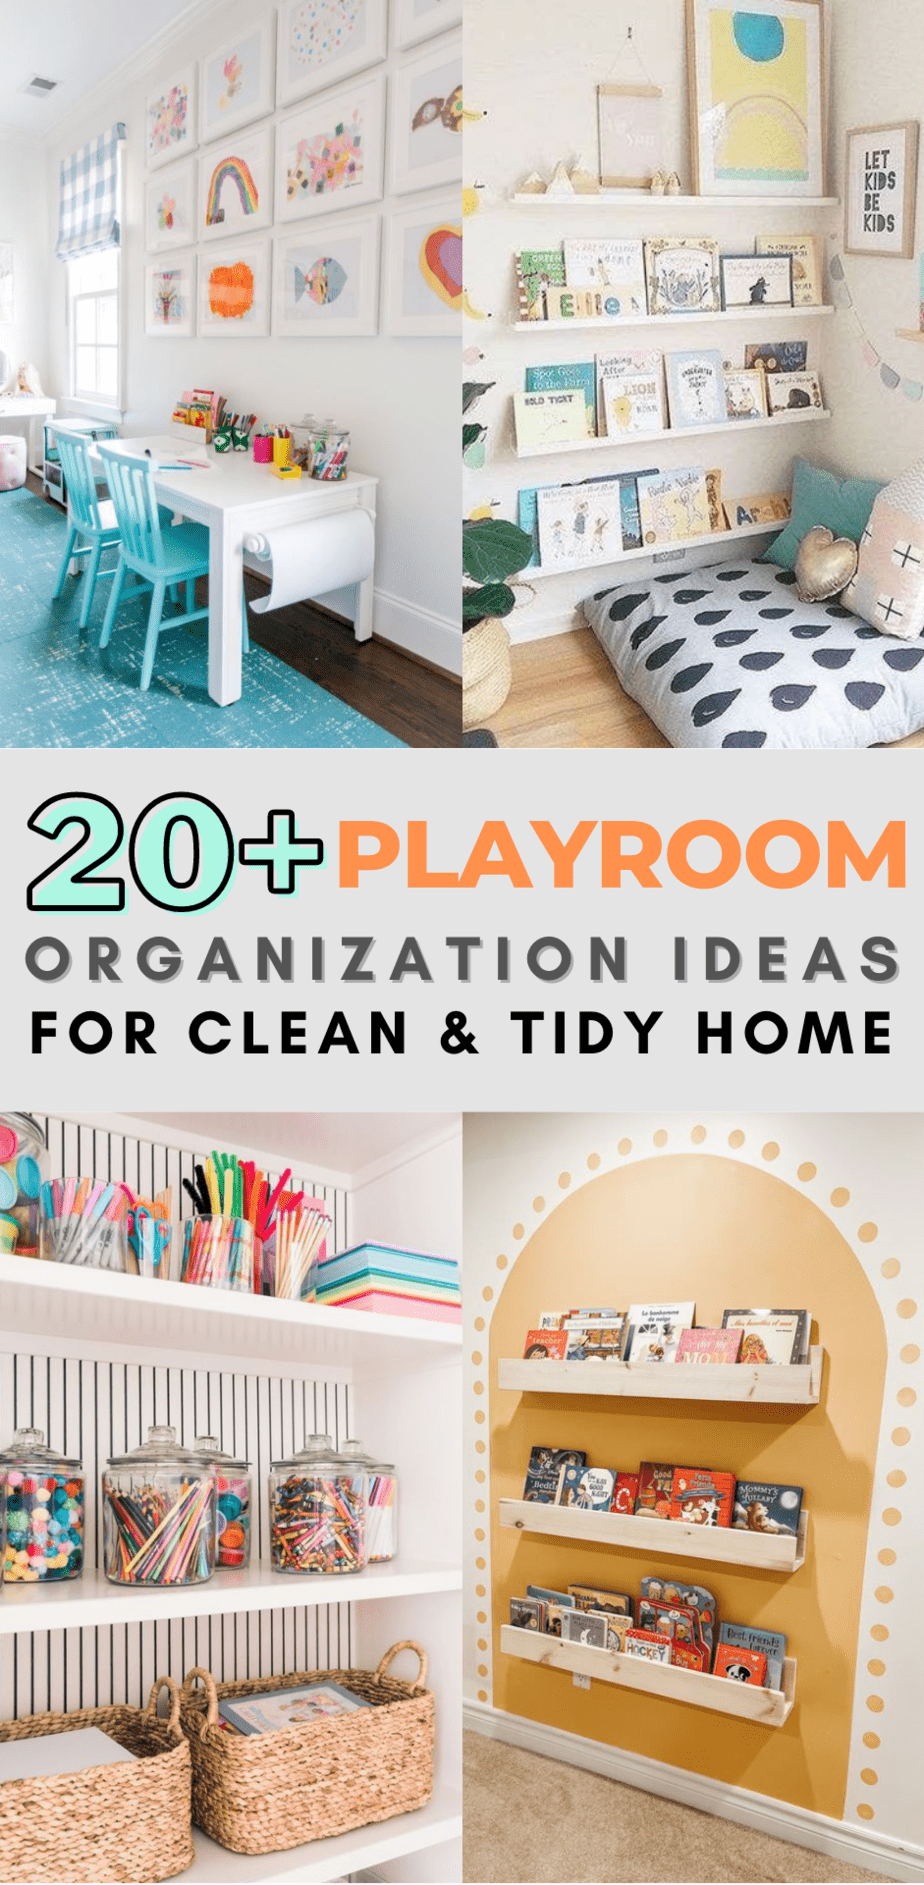 20+ playroom organization ideas